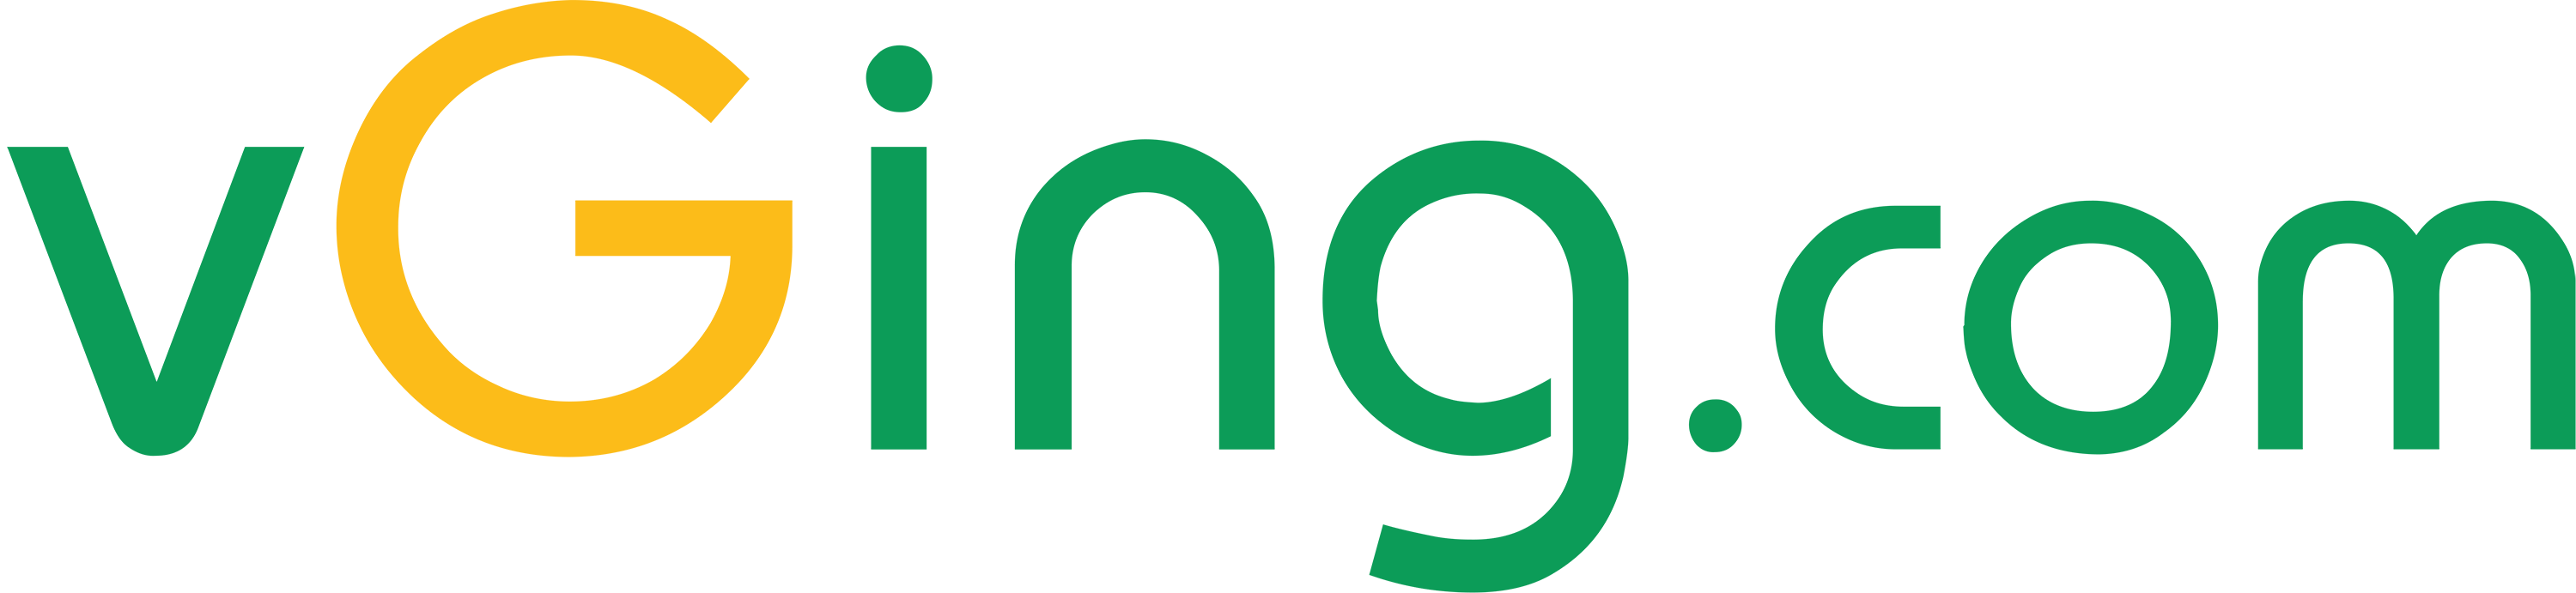 logo-vging